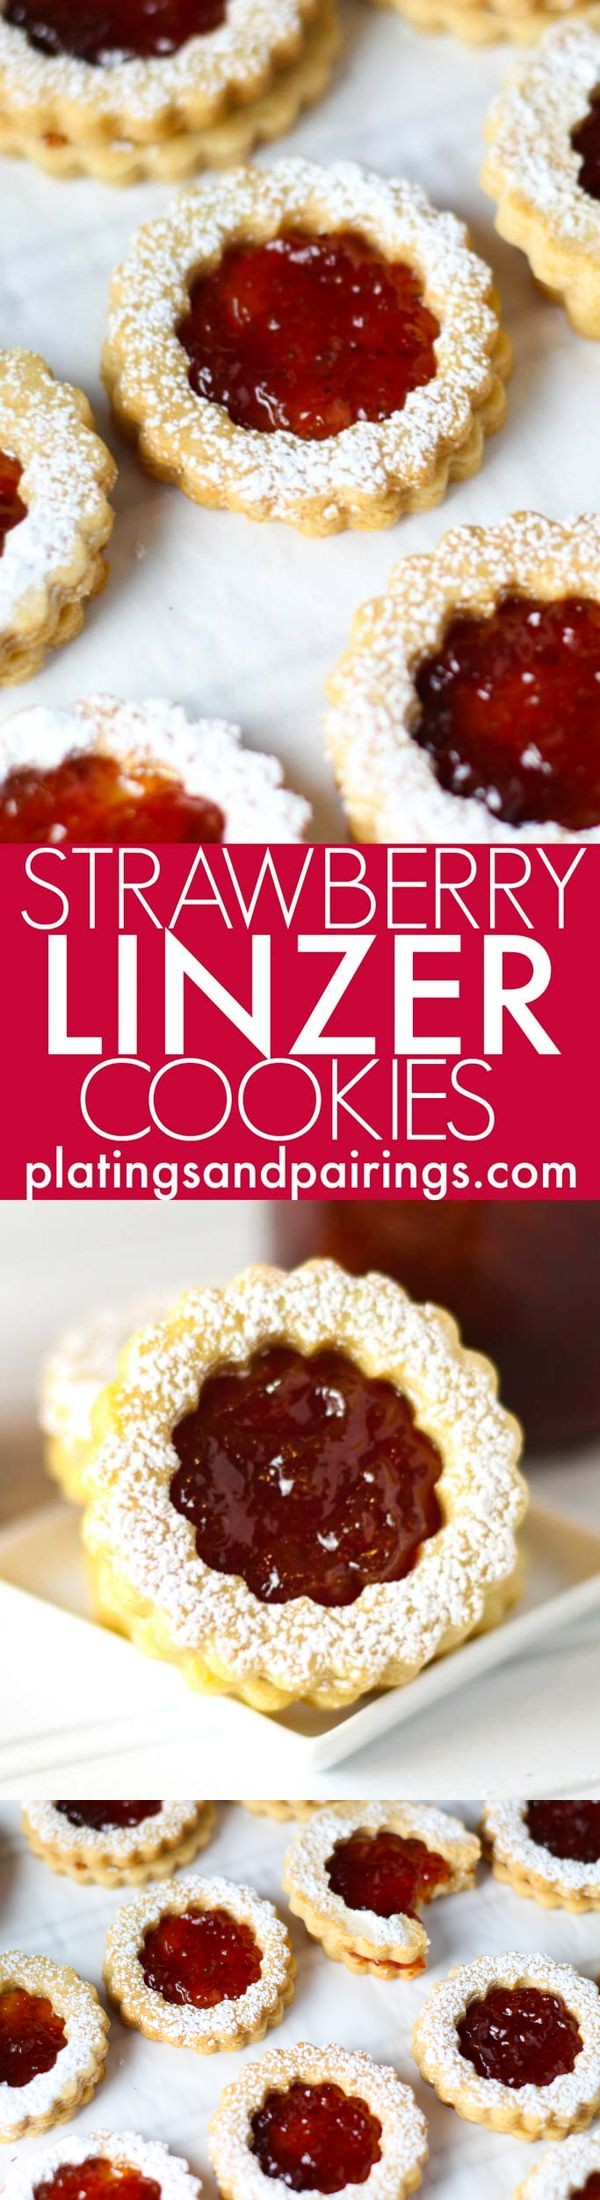 Linzer Cookies with Strawberry Jam